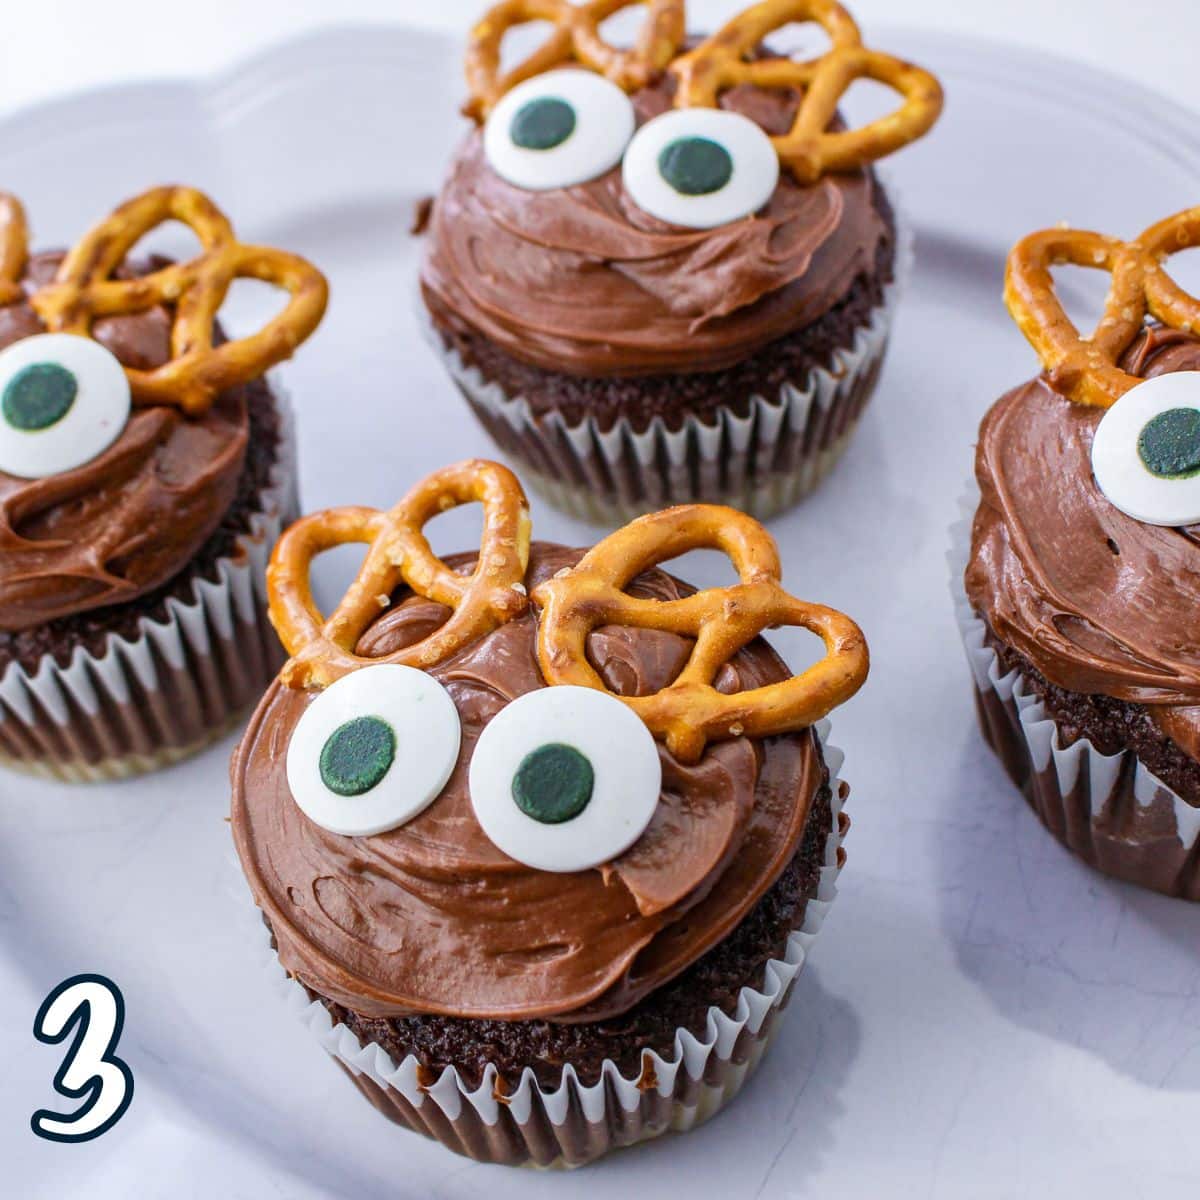 Reindeer cupcakes with pretzel antlers and eyes.